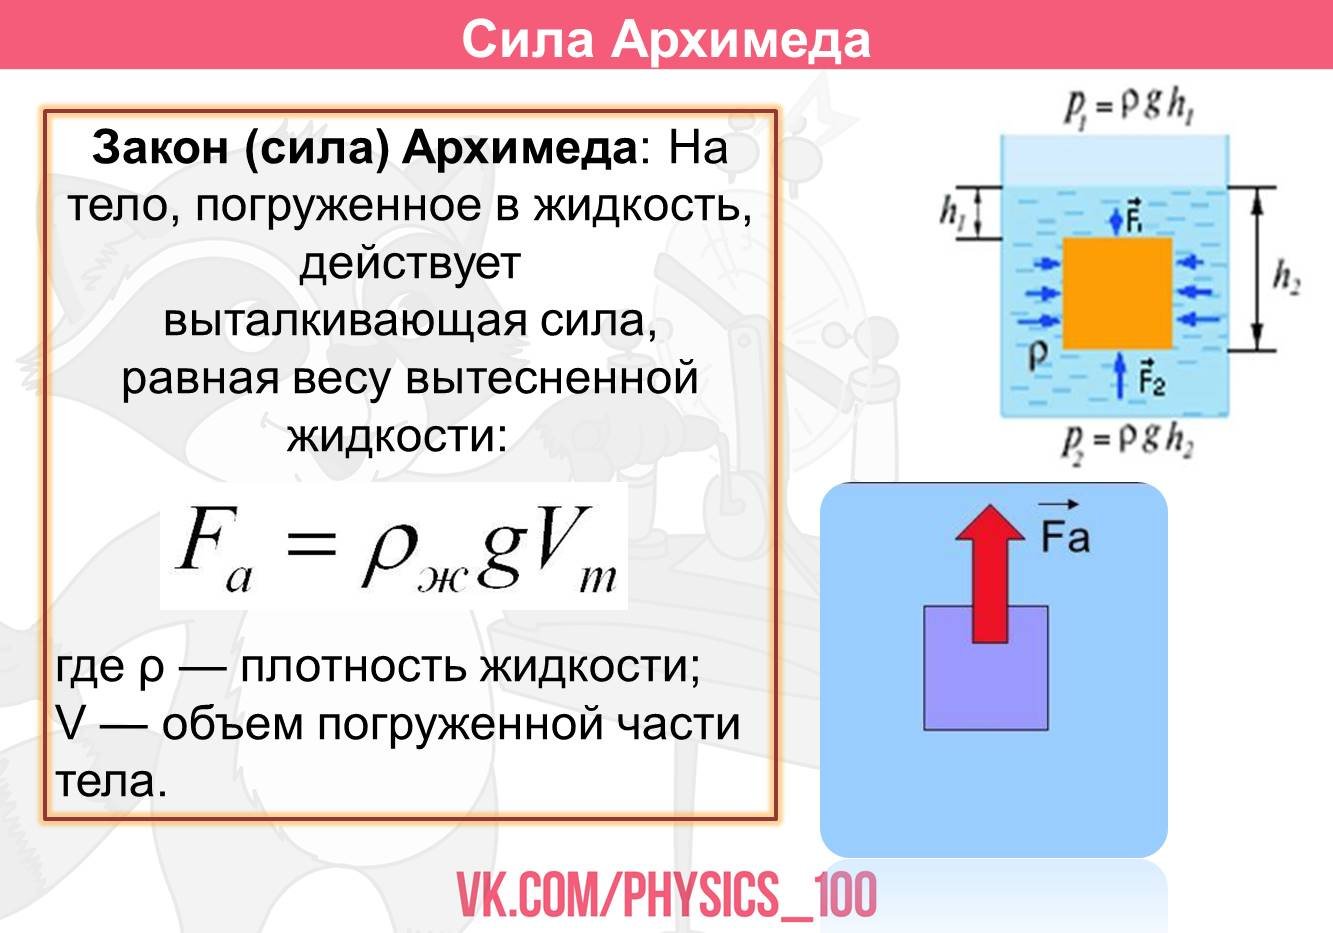 Вывод формулы архимеда. Сила Архимеда рисунок. Физика сила Архимеда. Сила Архимеда формула через массу. Закон Архимеда Эврика.